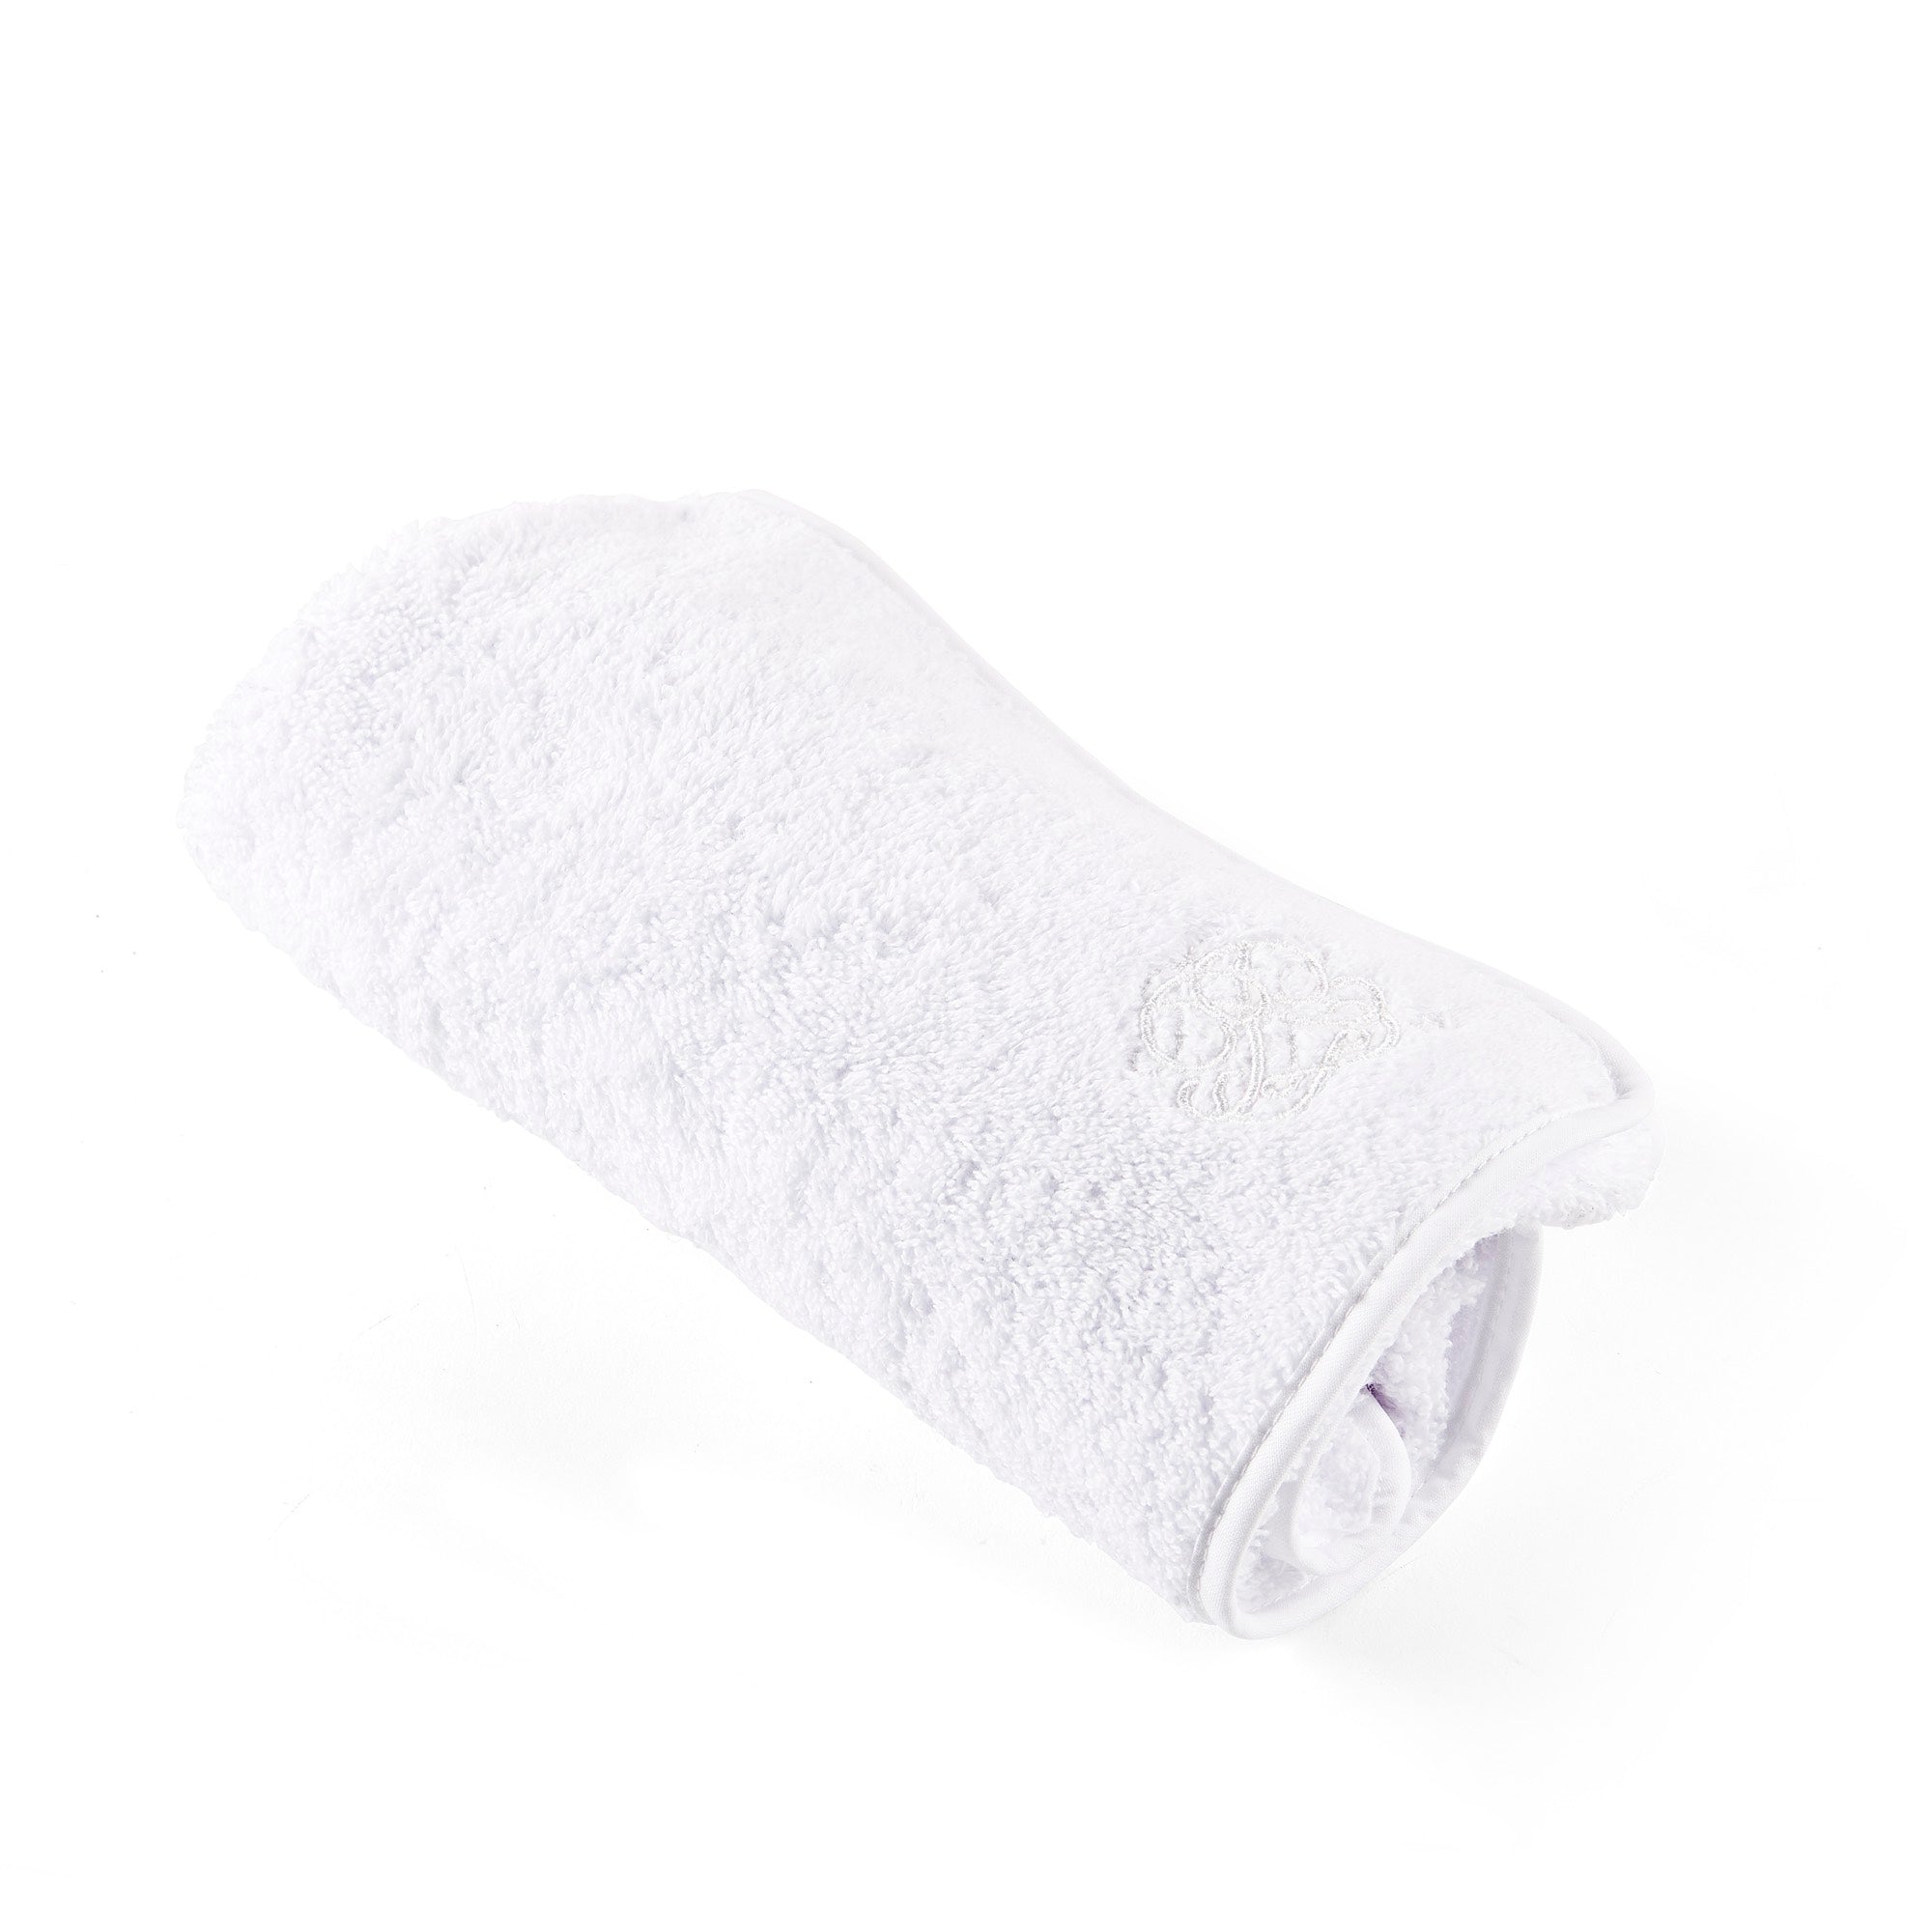 Theophile & Patachou Changing Mat Towel - Cotton White